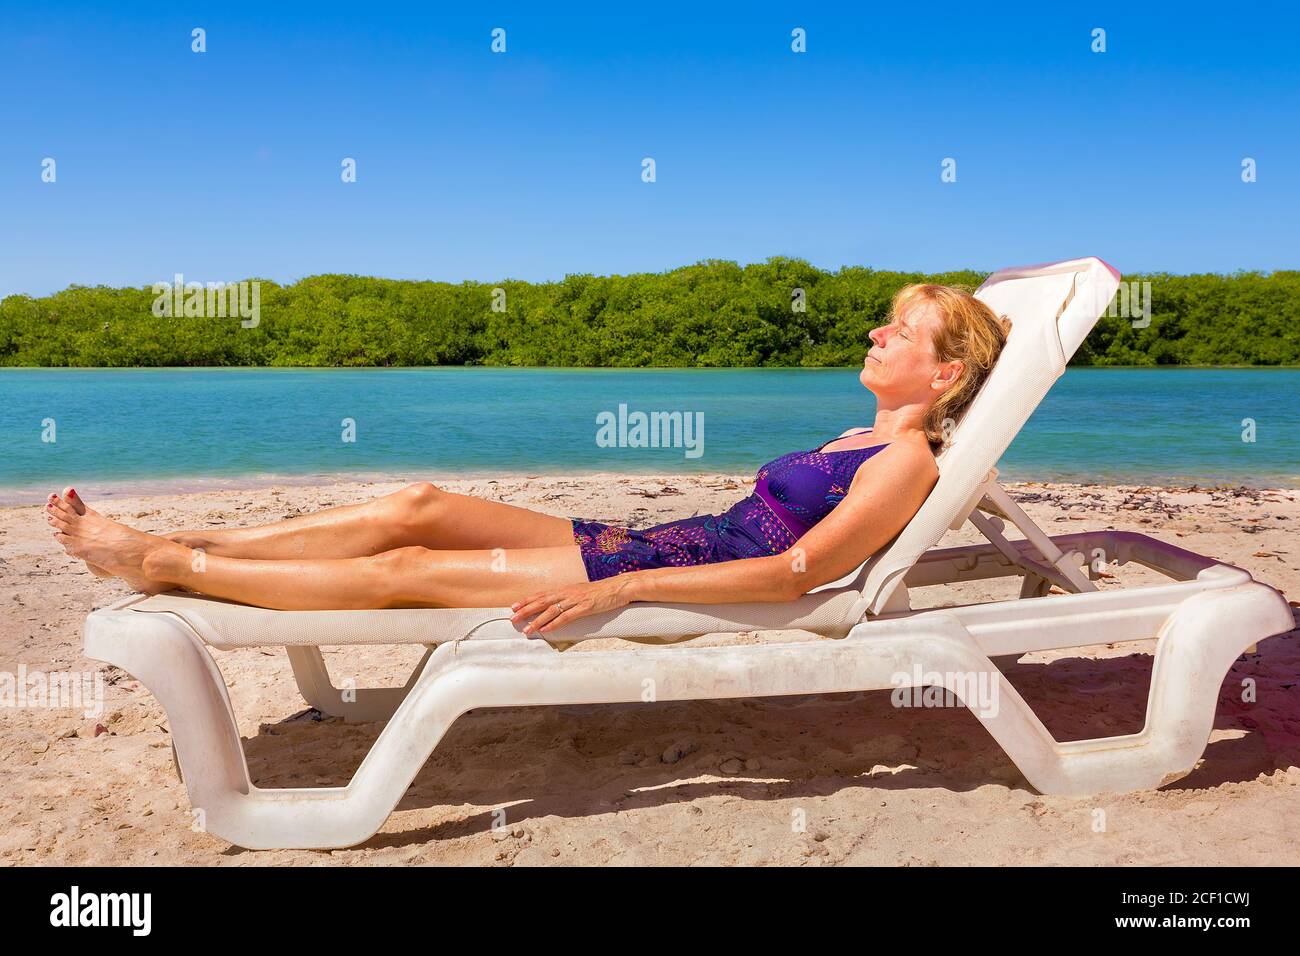 Caucasian woman sunbathes on beach bed by the sea on island Bonaire Stock Photo